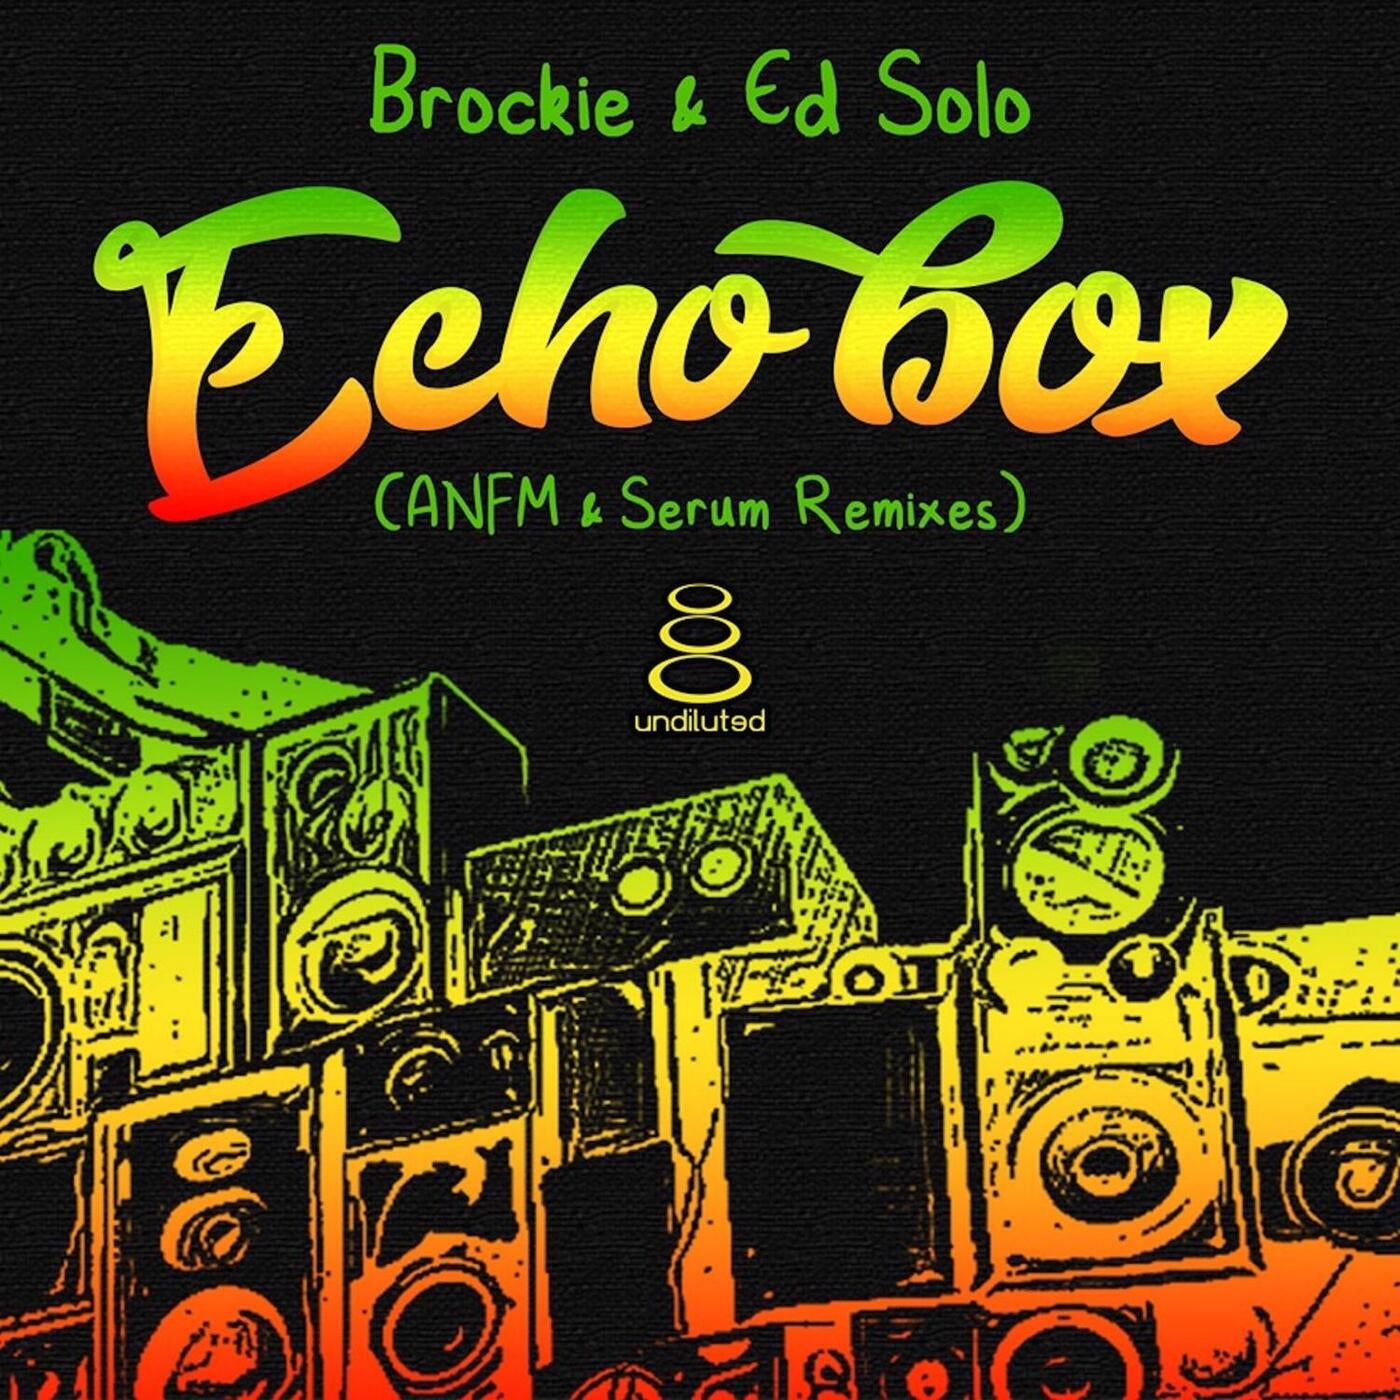 Echo Box (ANFM & Serum Remixes)